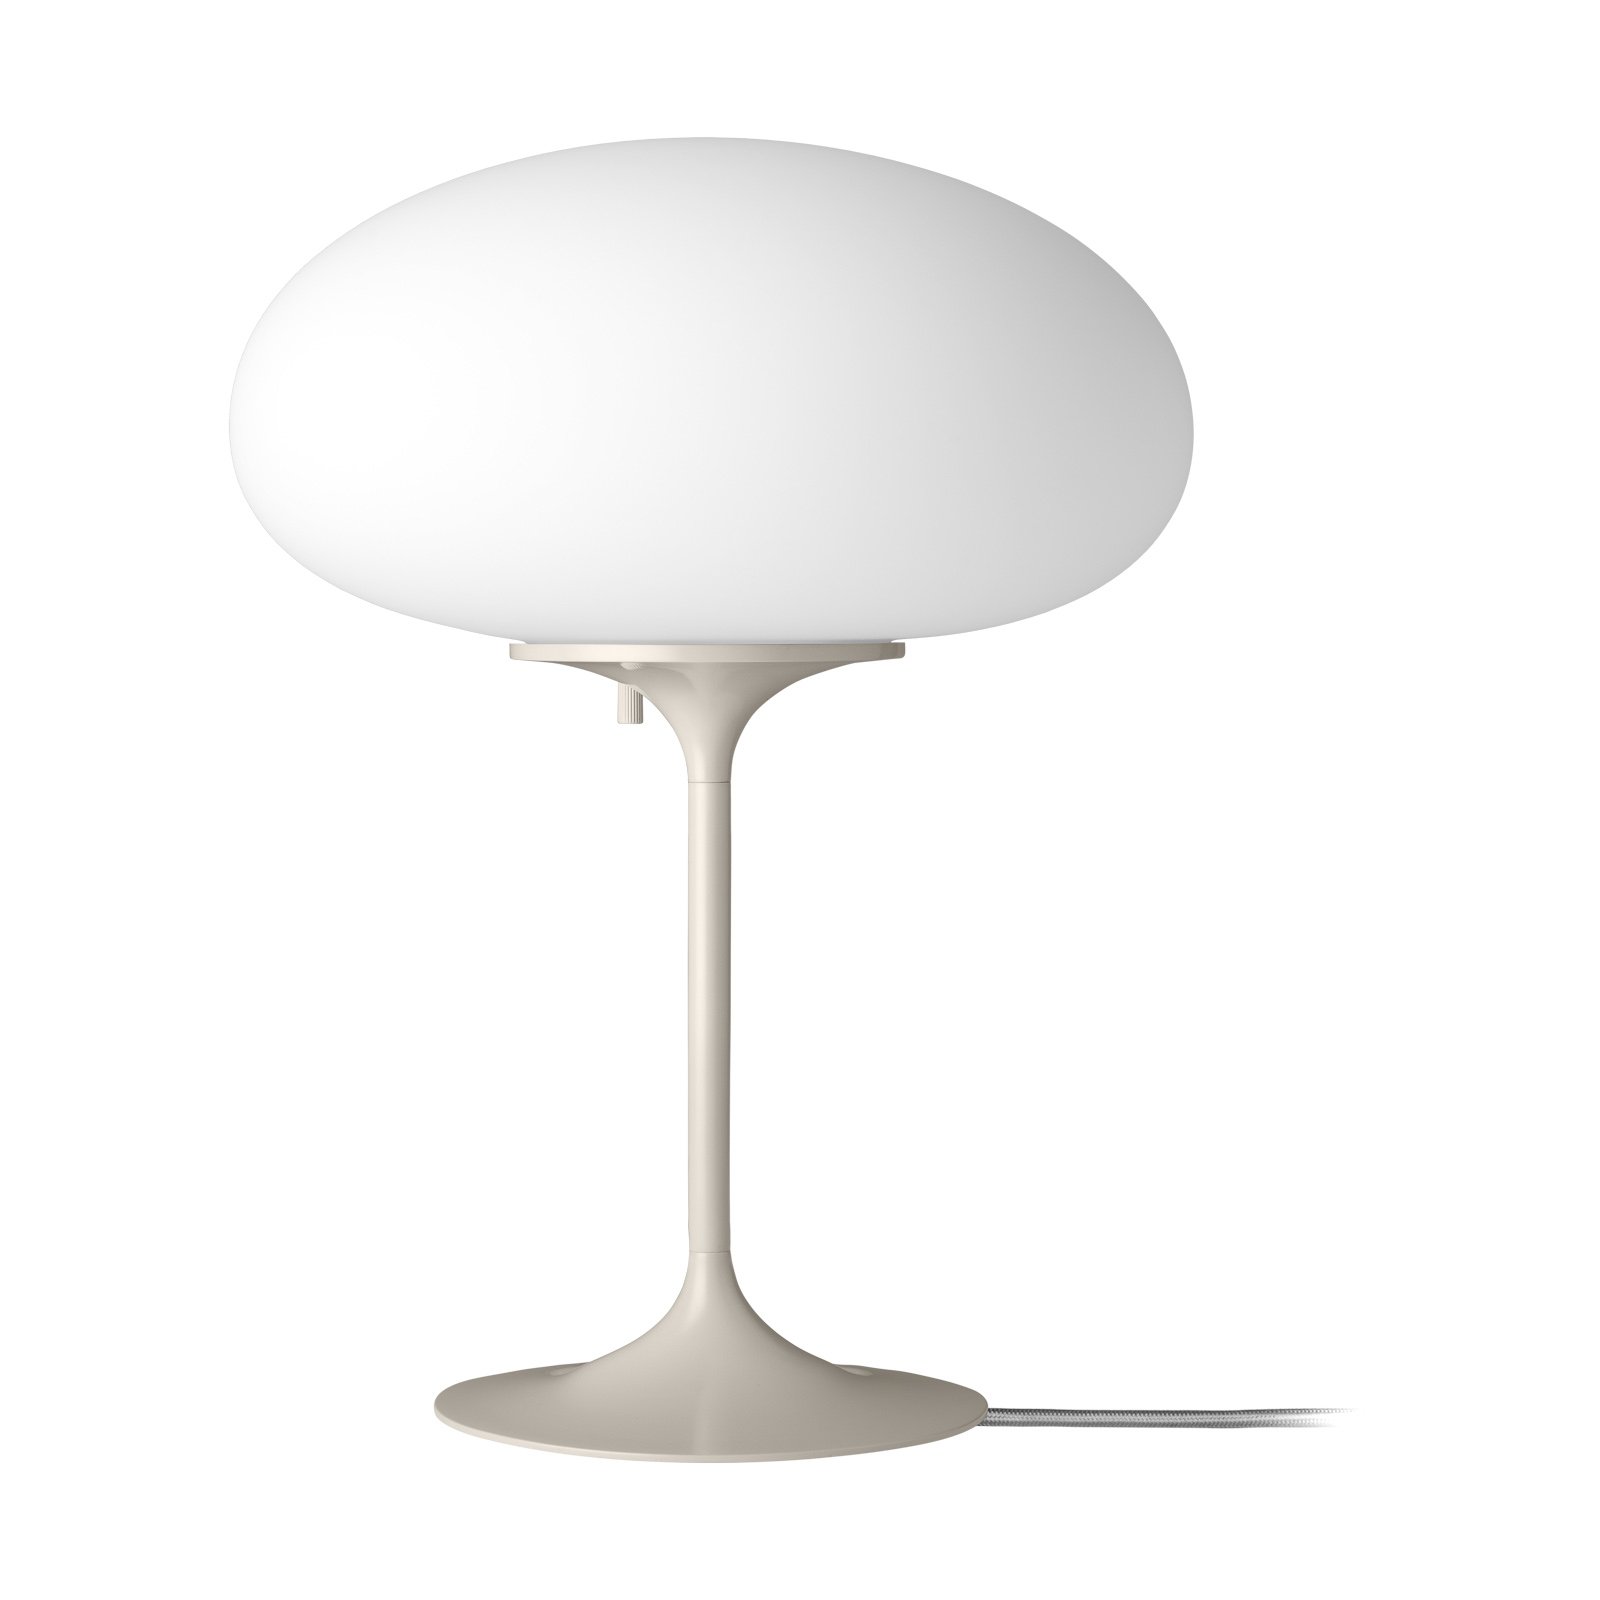 GUBI Stemlite asztali lámpa, szürke, 42 cm